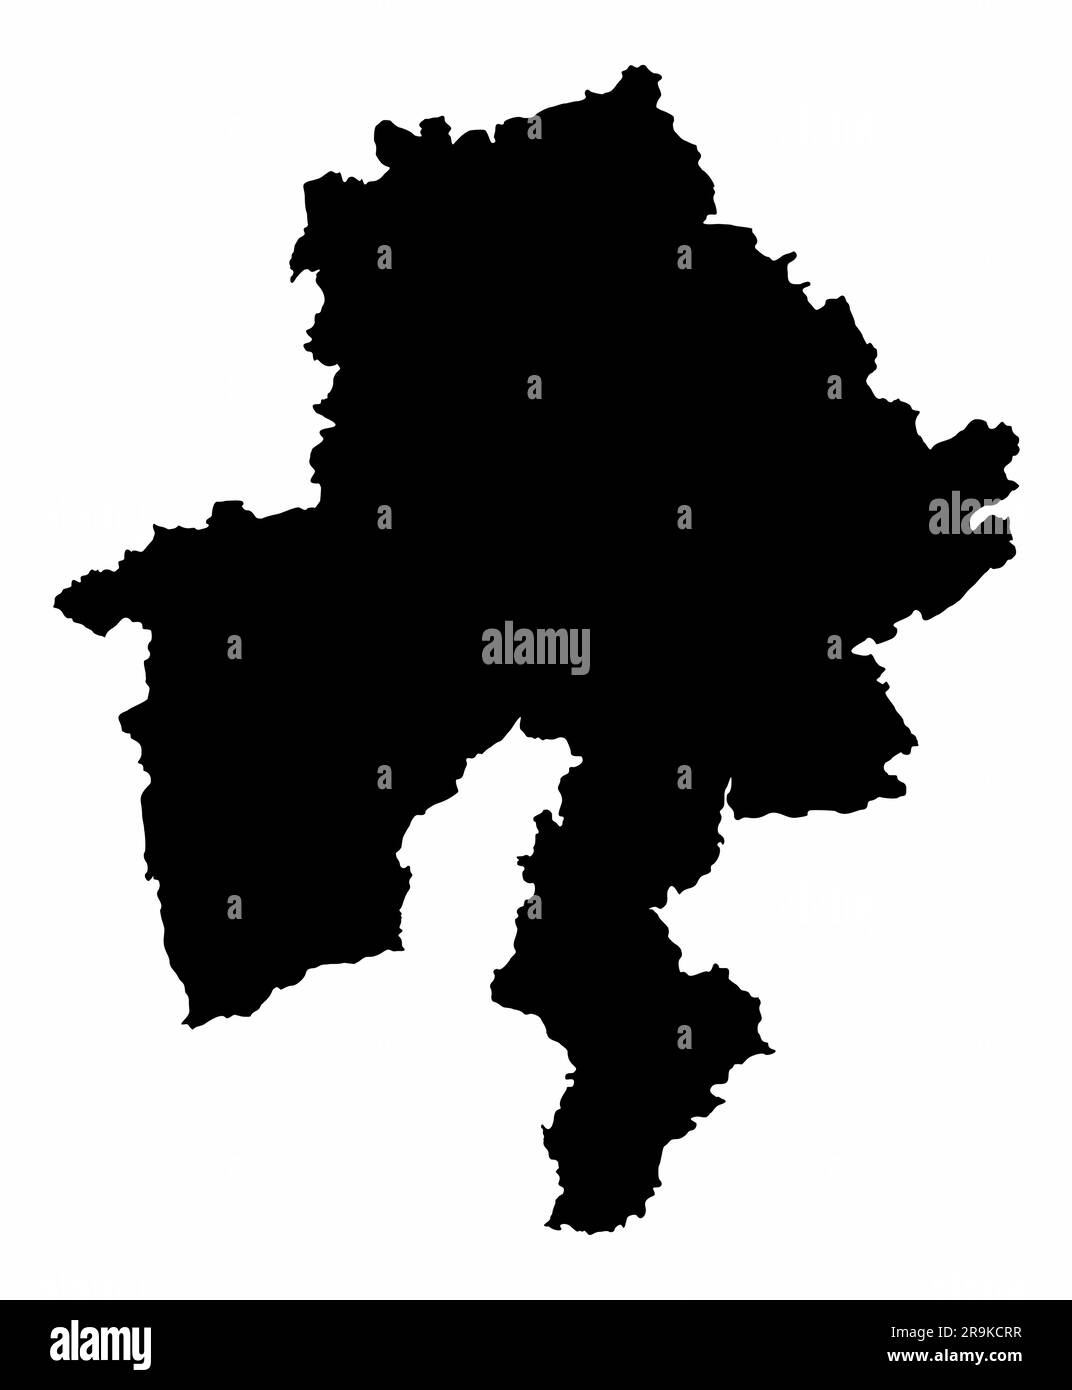 Namur map silhouette isolated on white background, Belgium Stock Vector